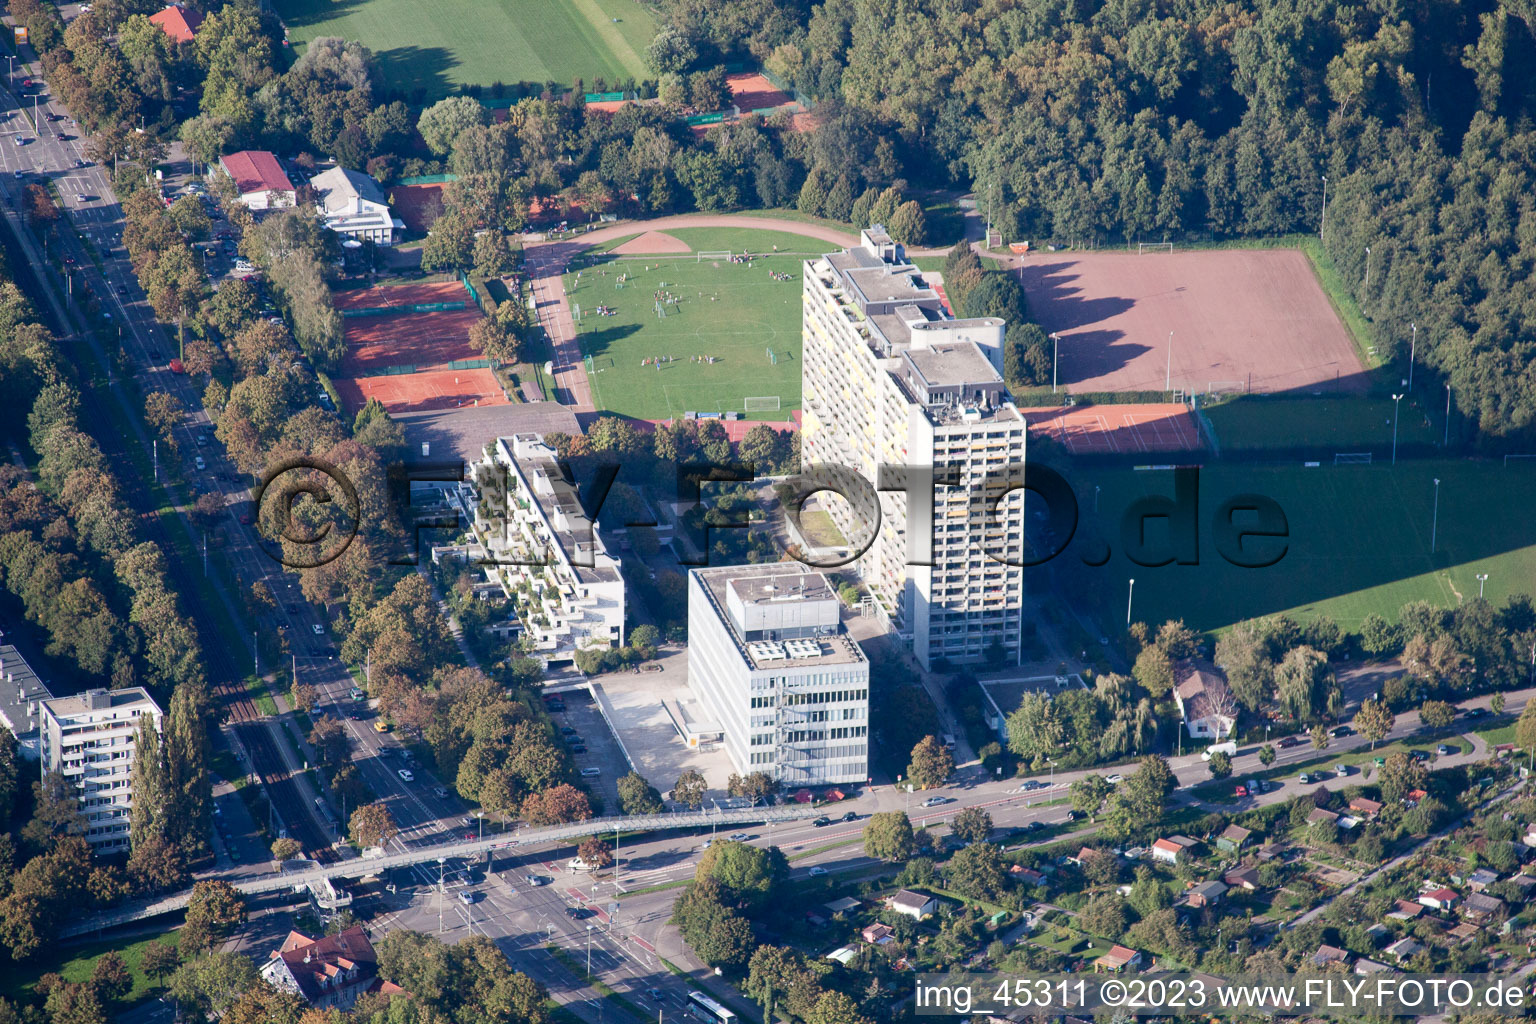 Quartier Weiherfeld-Dammerstock in Karlsruhe dans le département Bade-Wurtemberg, Allemagne vue d'en haut